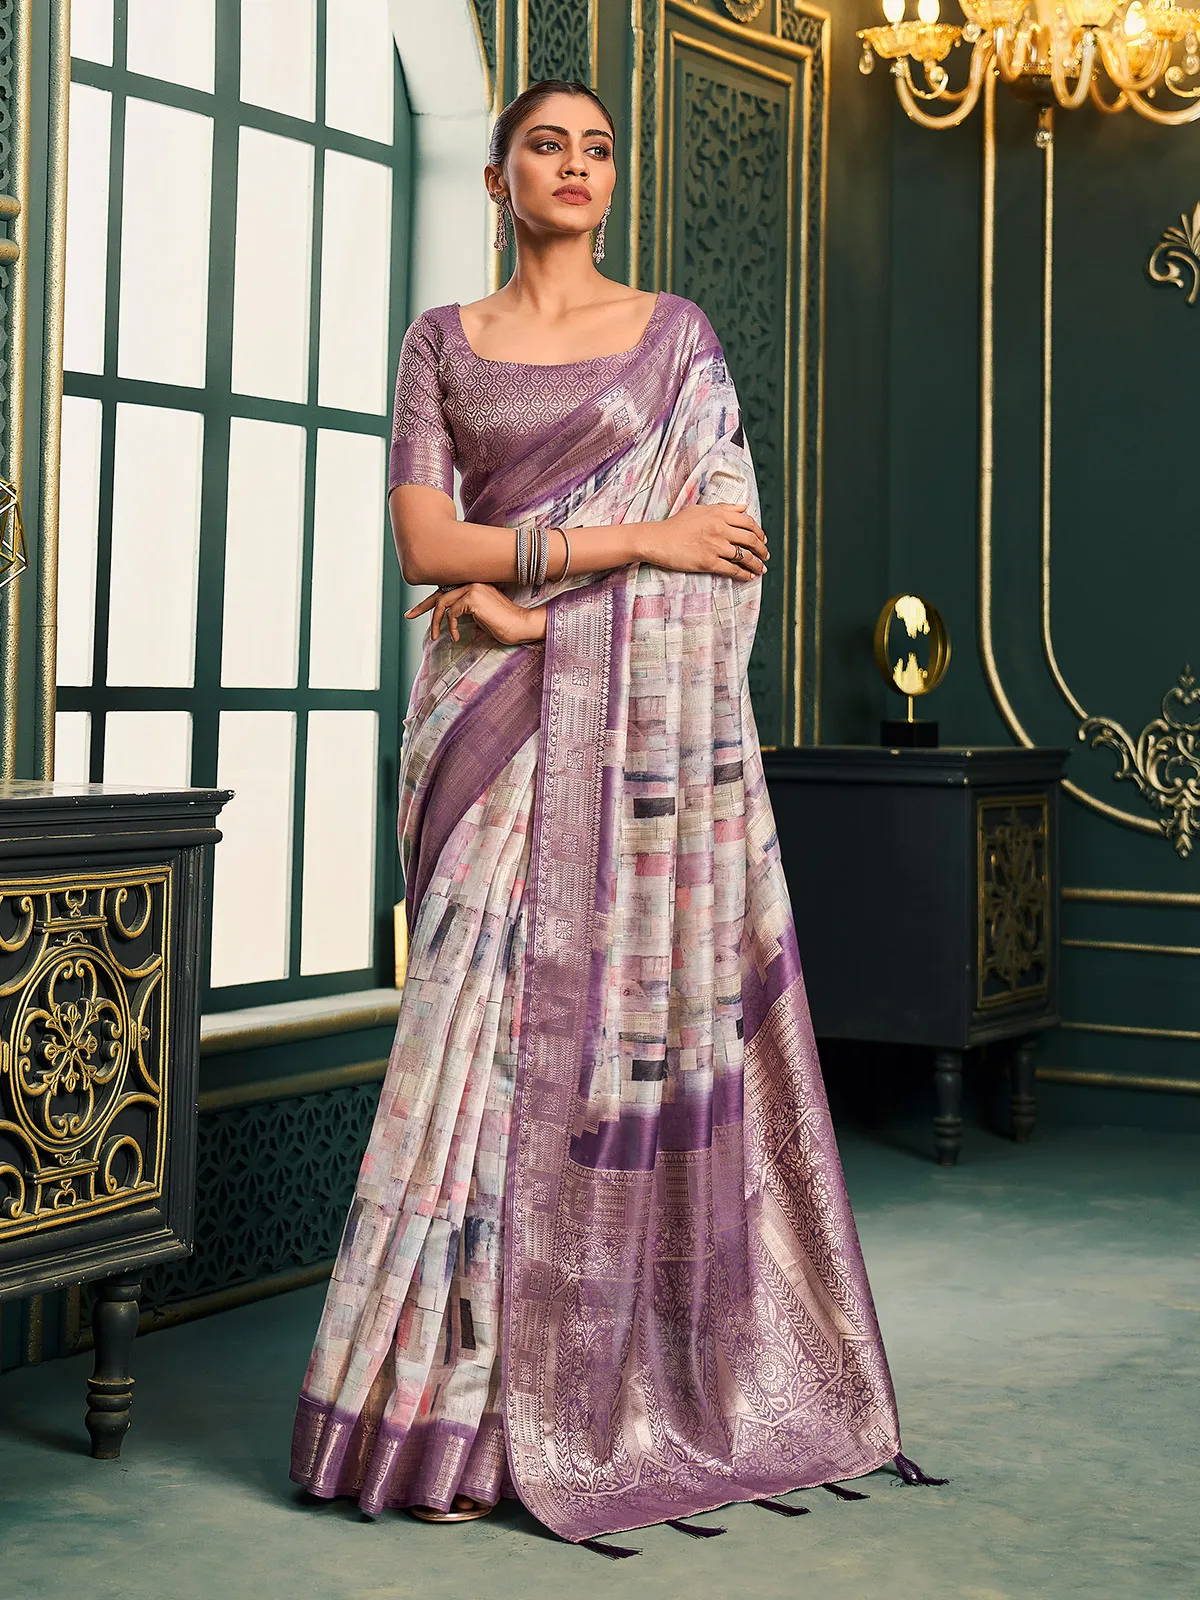 Stunning purple and white cotton saree